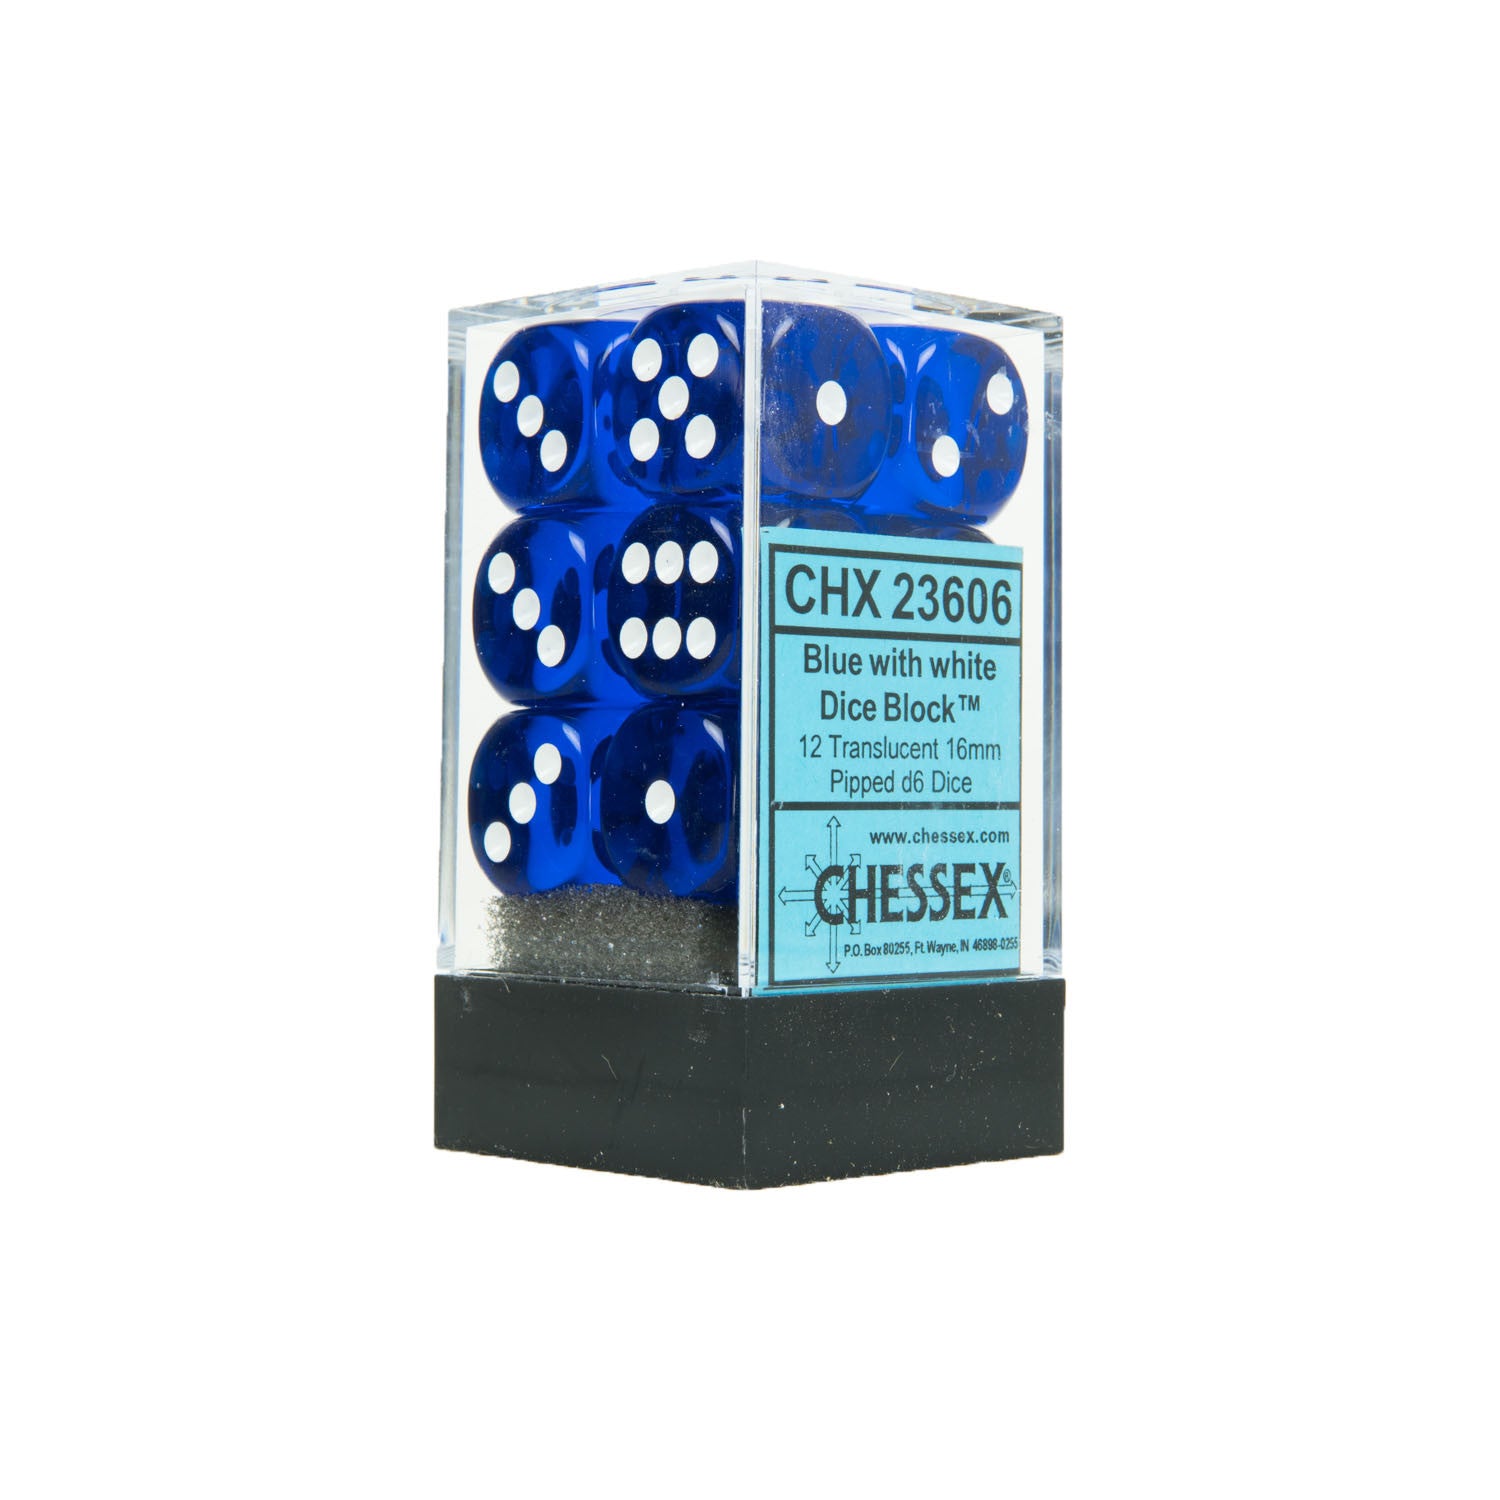 Chessex CHX23606 12 Blue w/ white Translucent 16mm d6 Dice